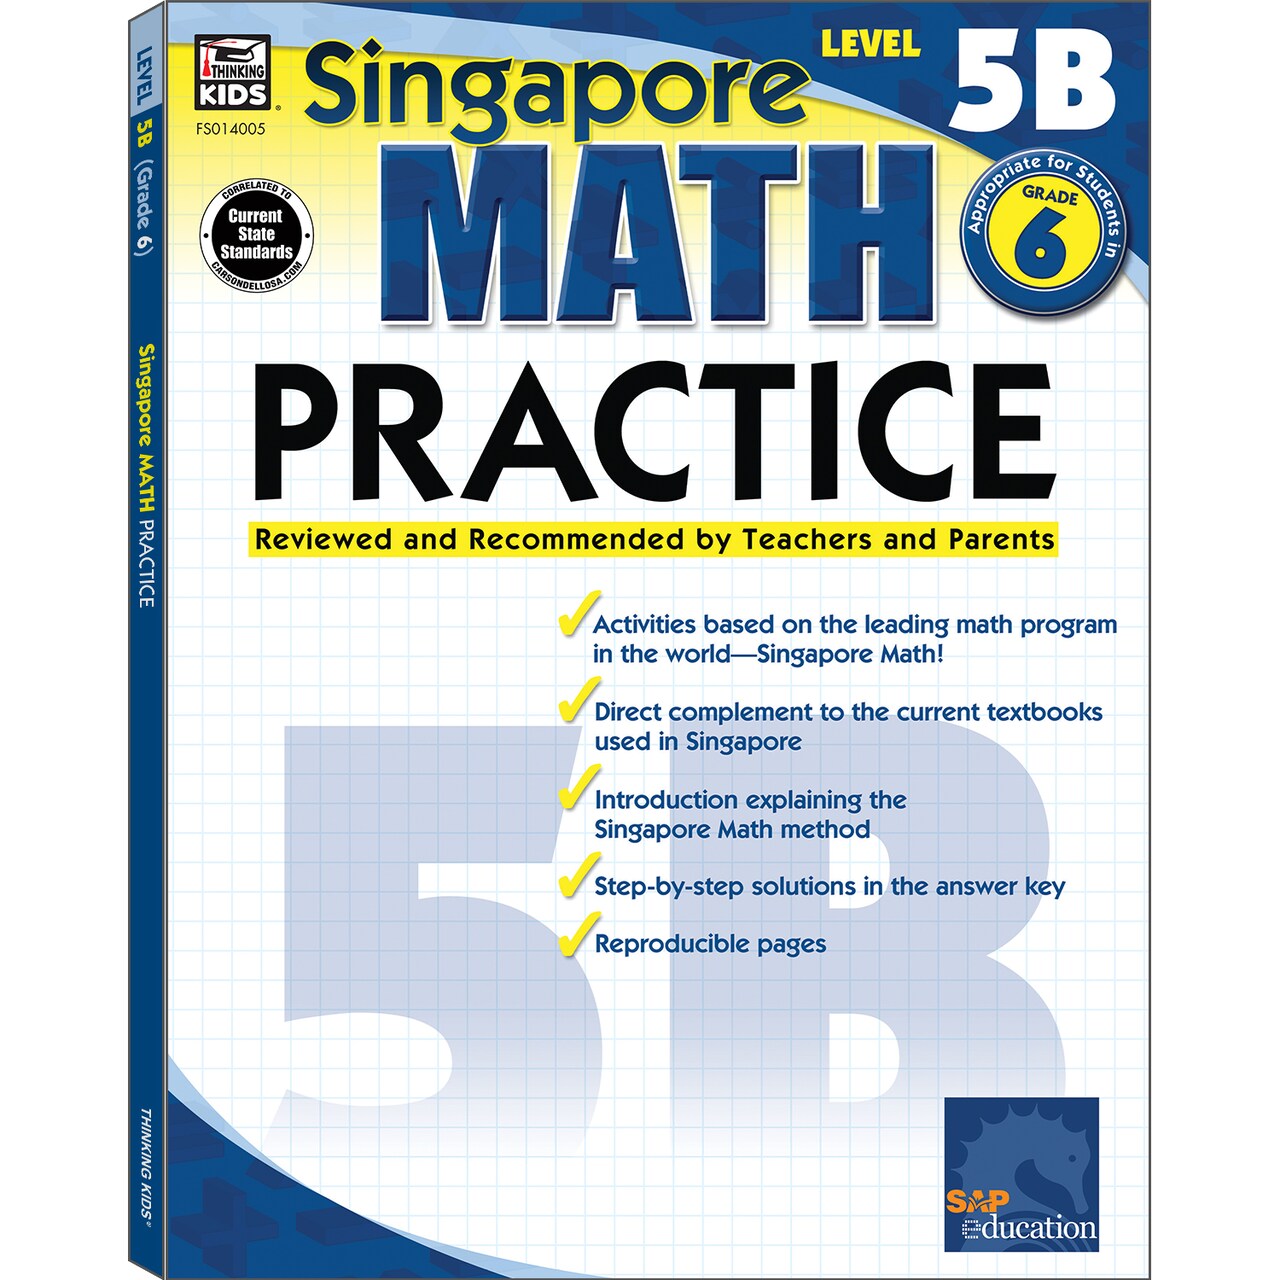 Singapore Math Level 5B 6th Grade Math Workbook, Singapore Math Grade 6, Decimals, Percentages, Measurements, and Geometry Workbook, 6th Grade Math Classroom or Homeschool Curriculum